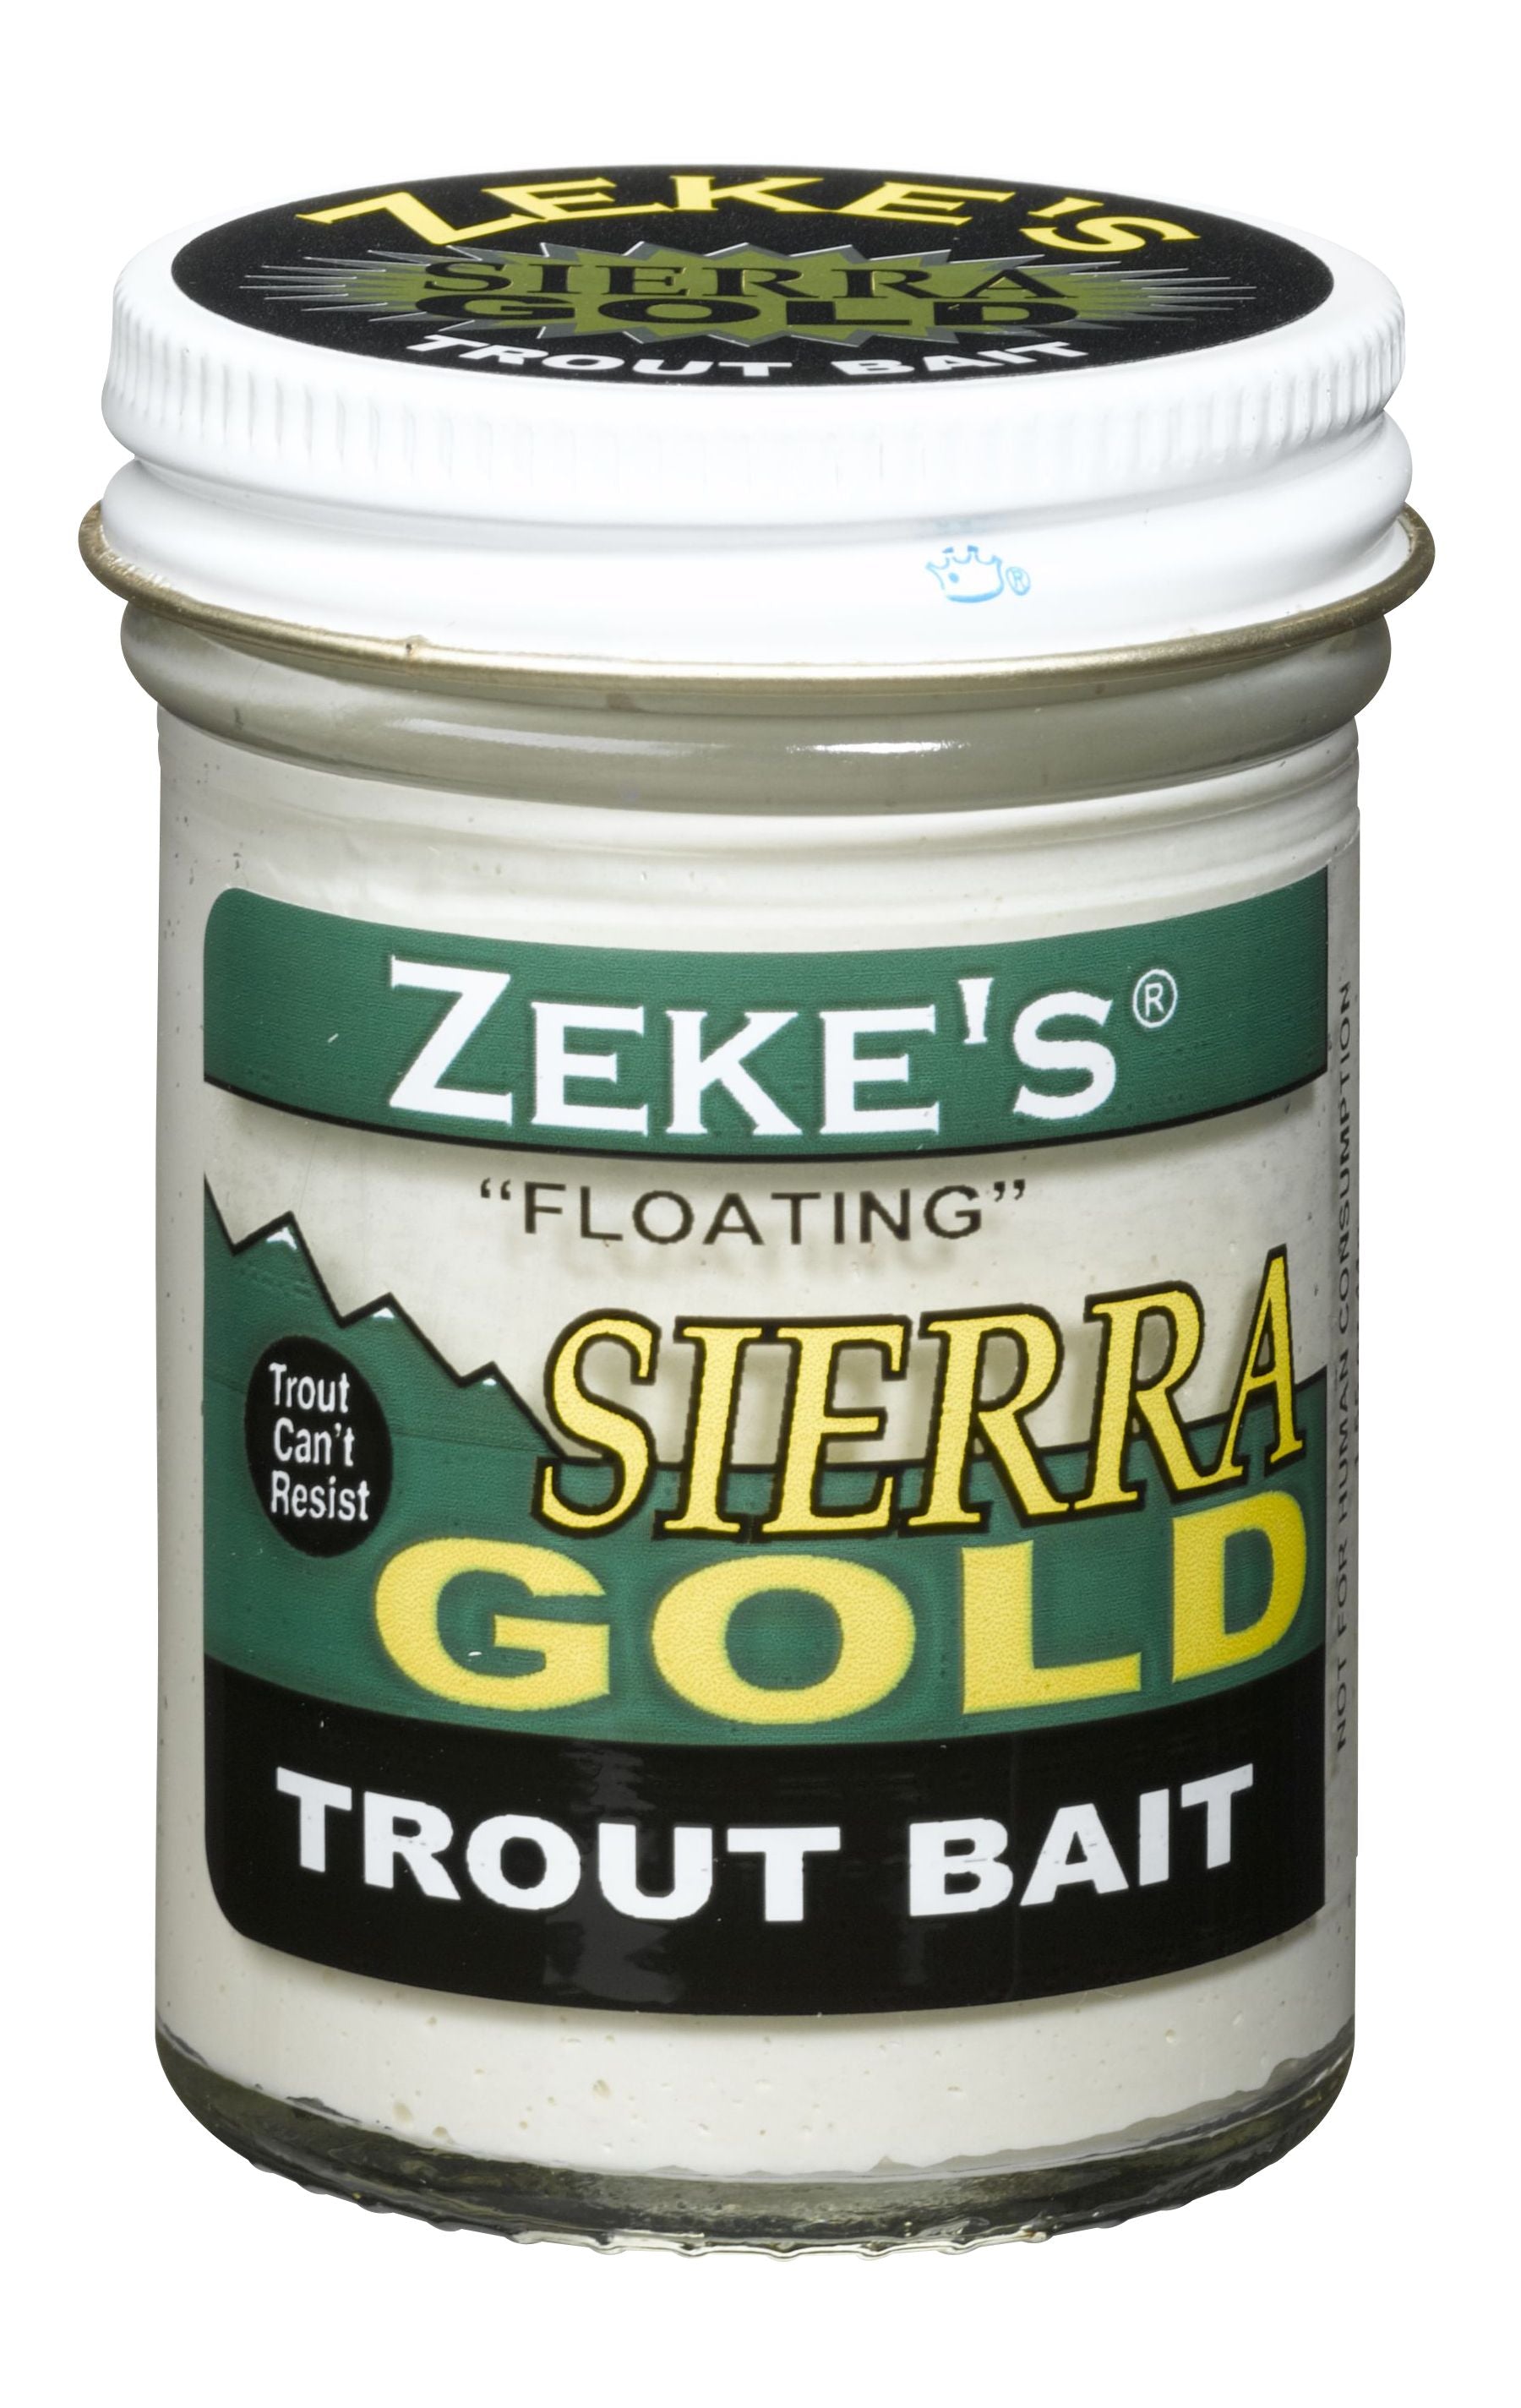 Zeke's Sierra Gold Floating Trout Bait Corn - Creme